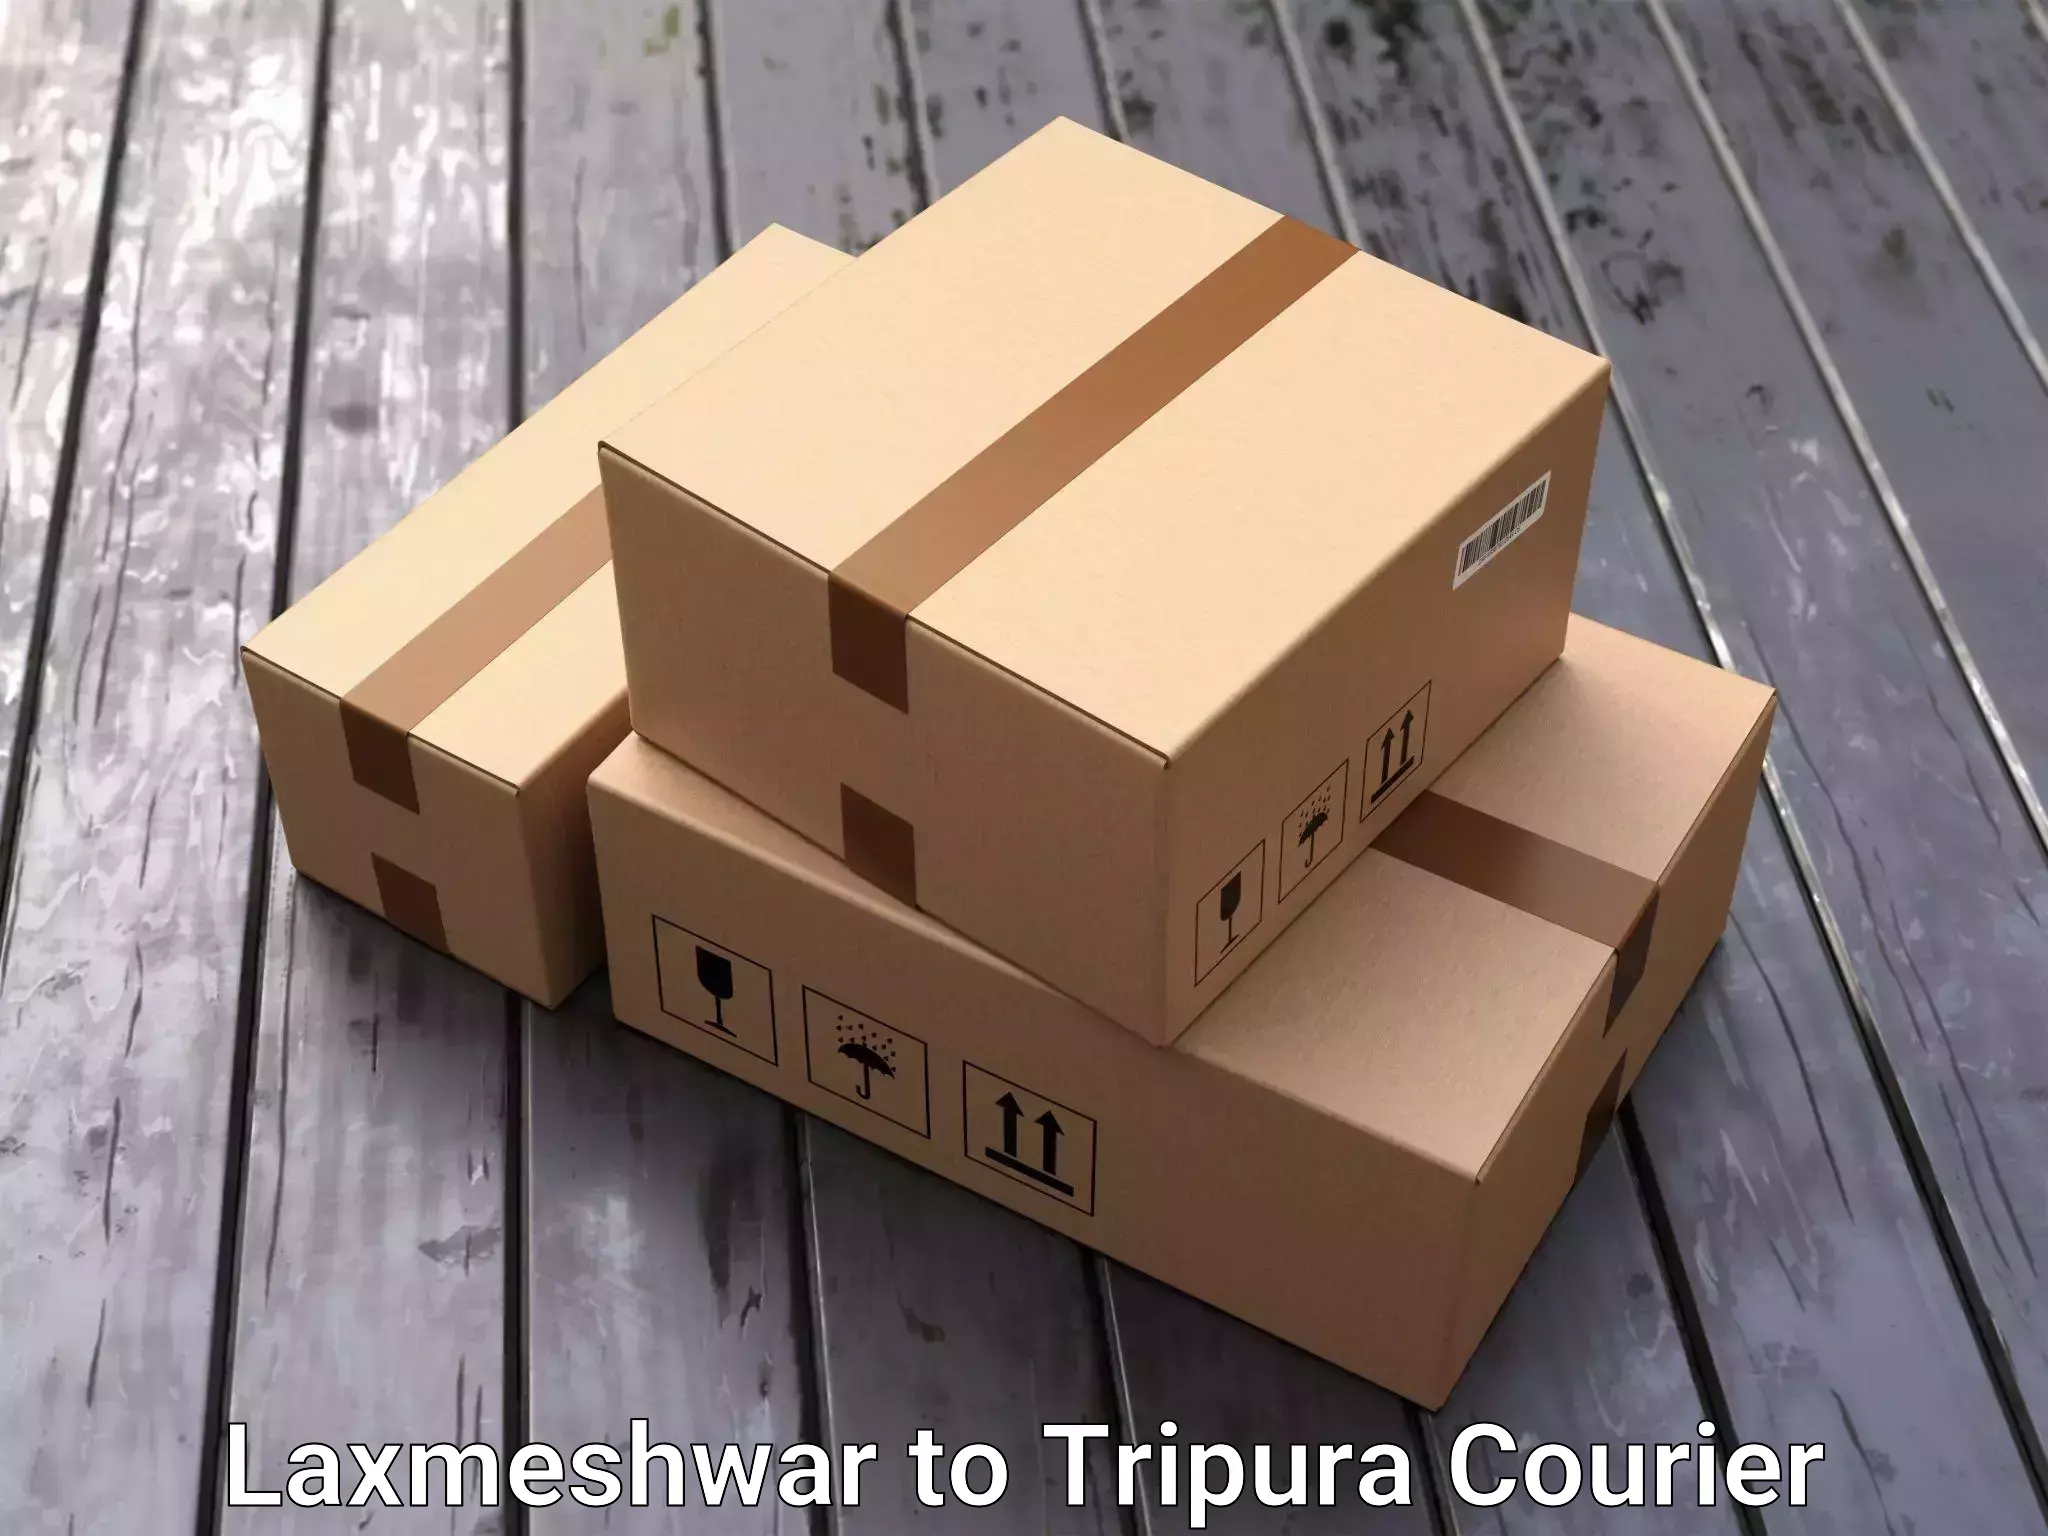 Quality moving and storage Laxmeshwar to Udaipur Tripura